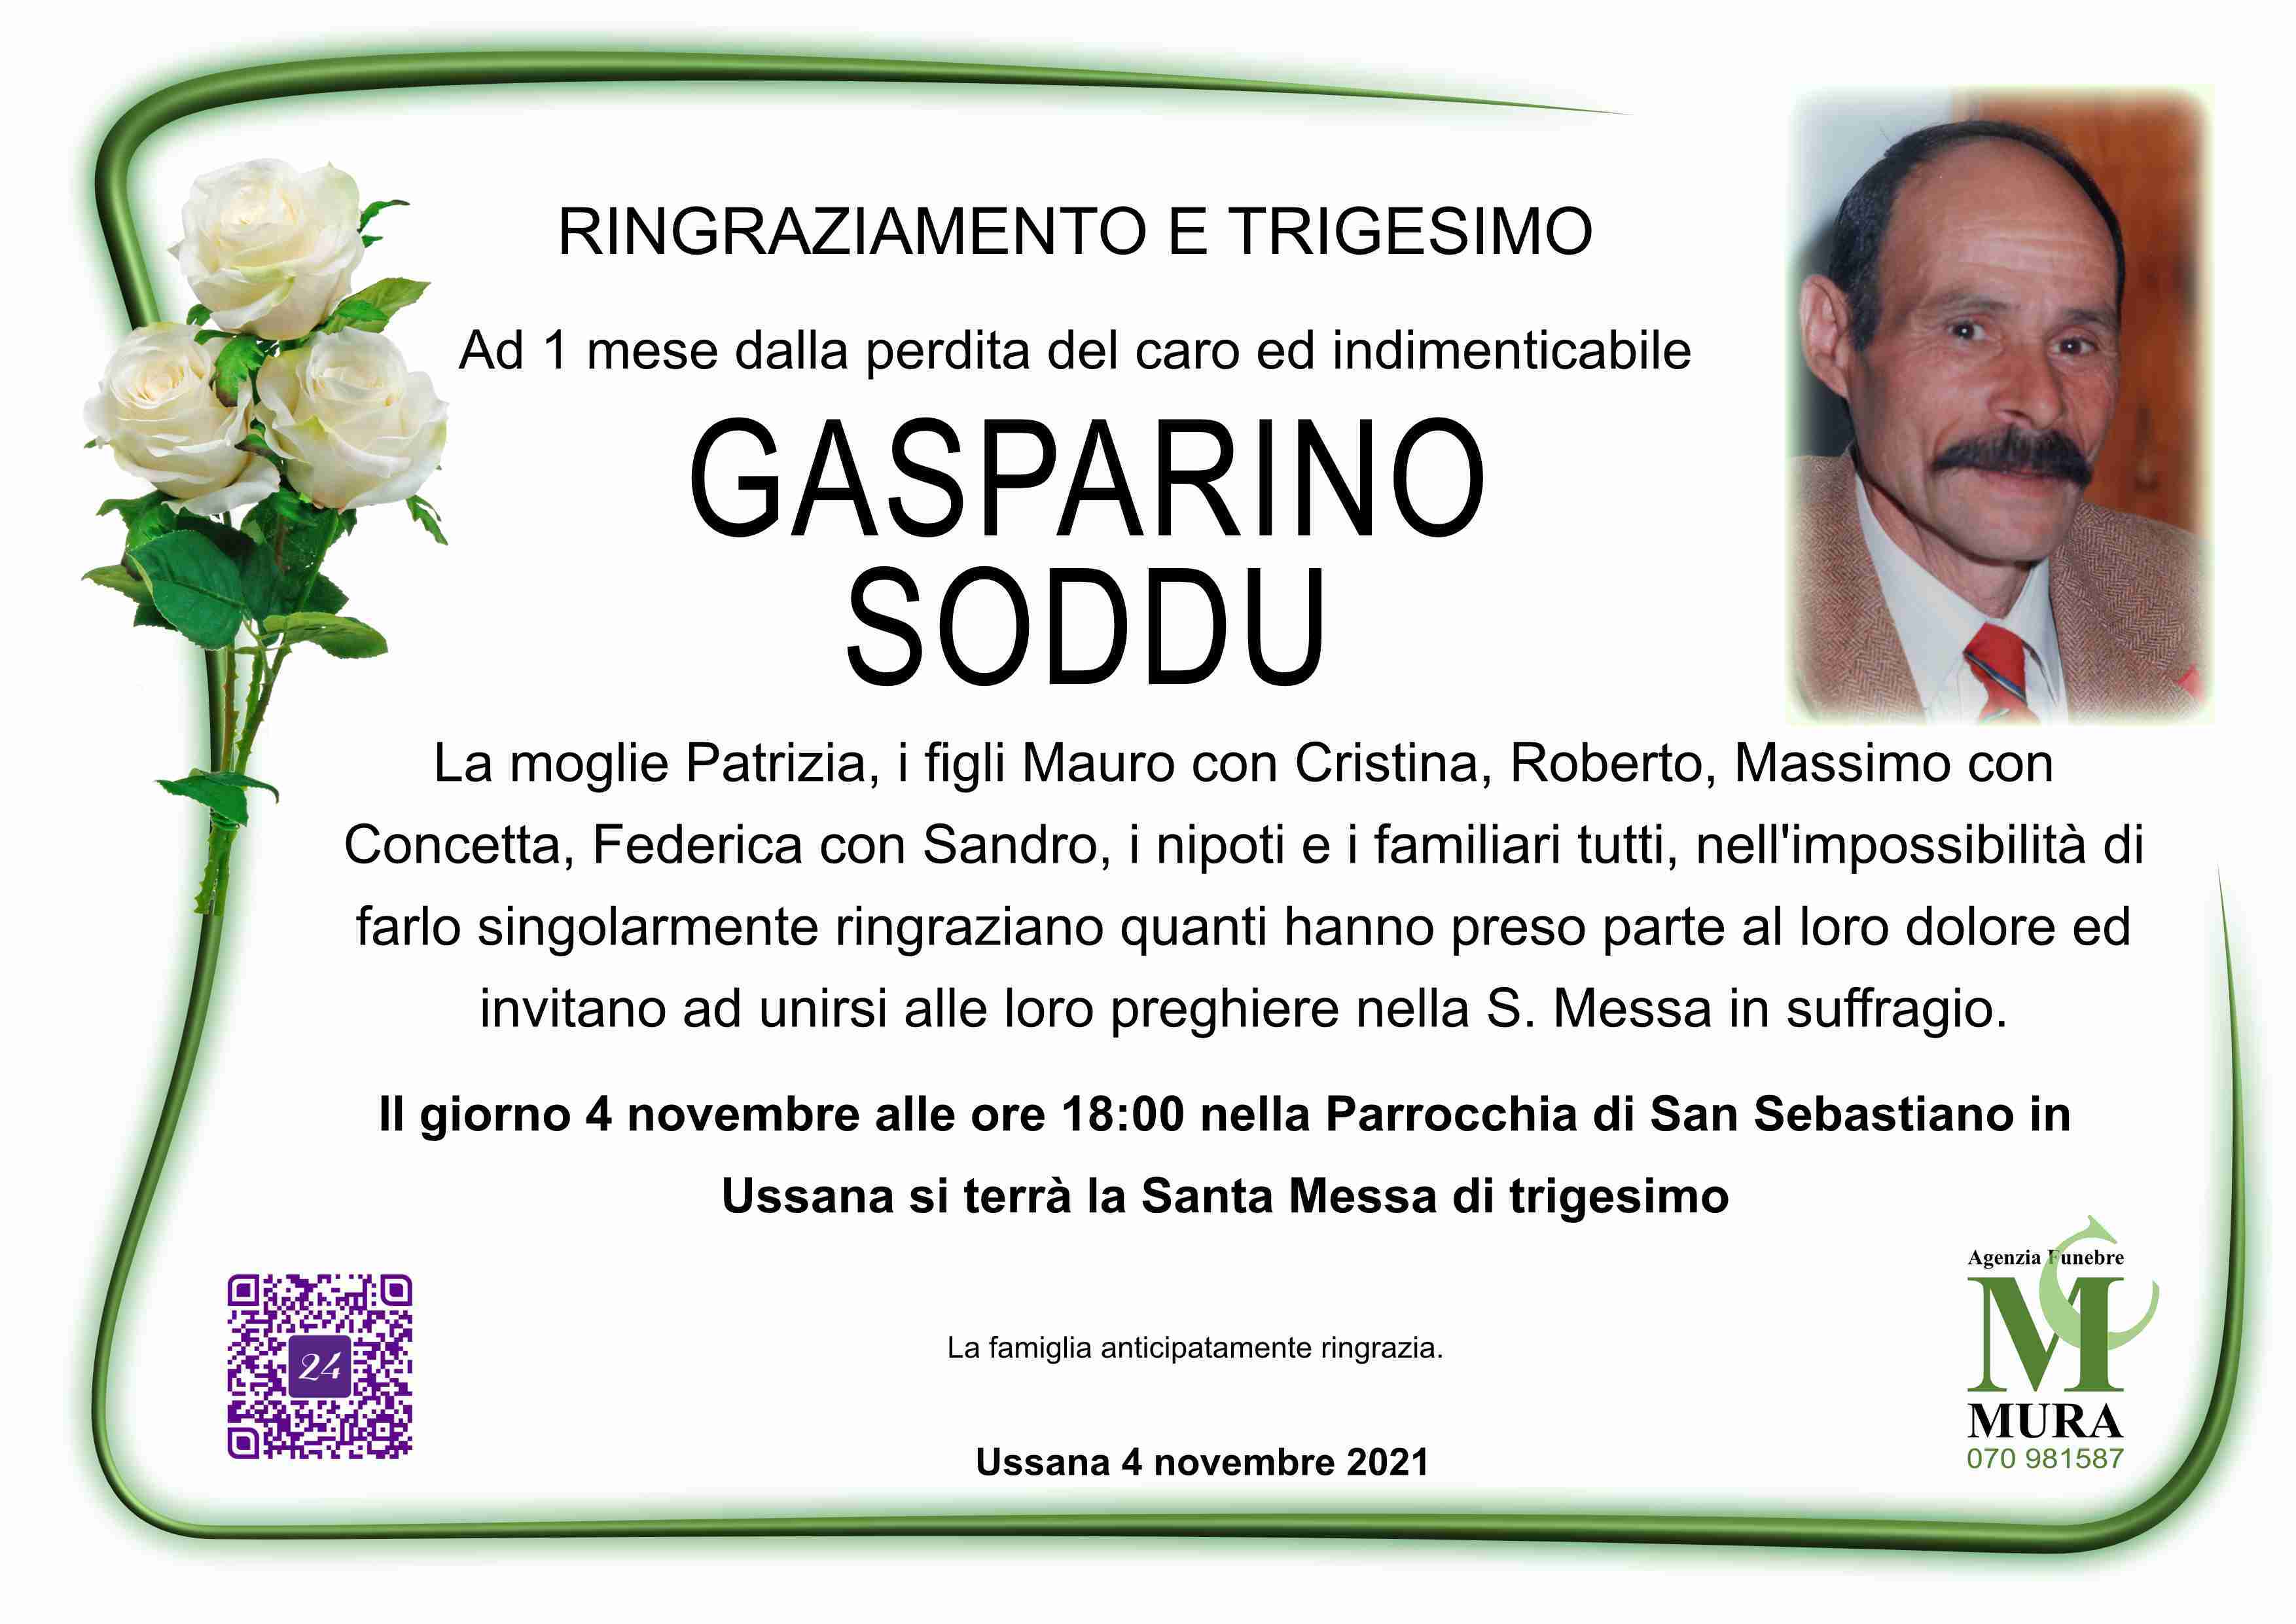 Gasparino Soddu